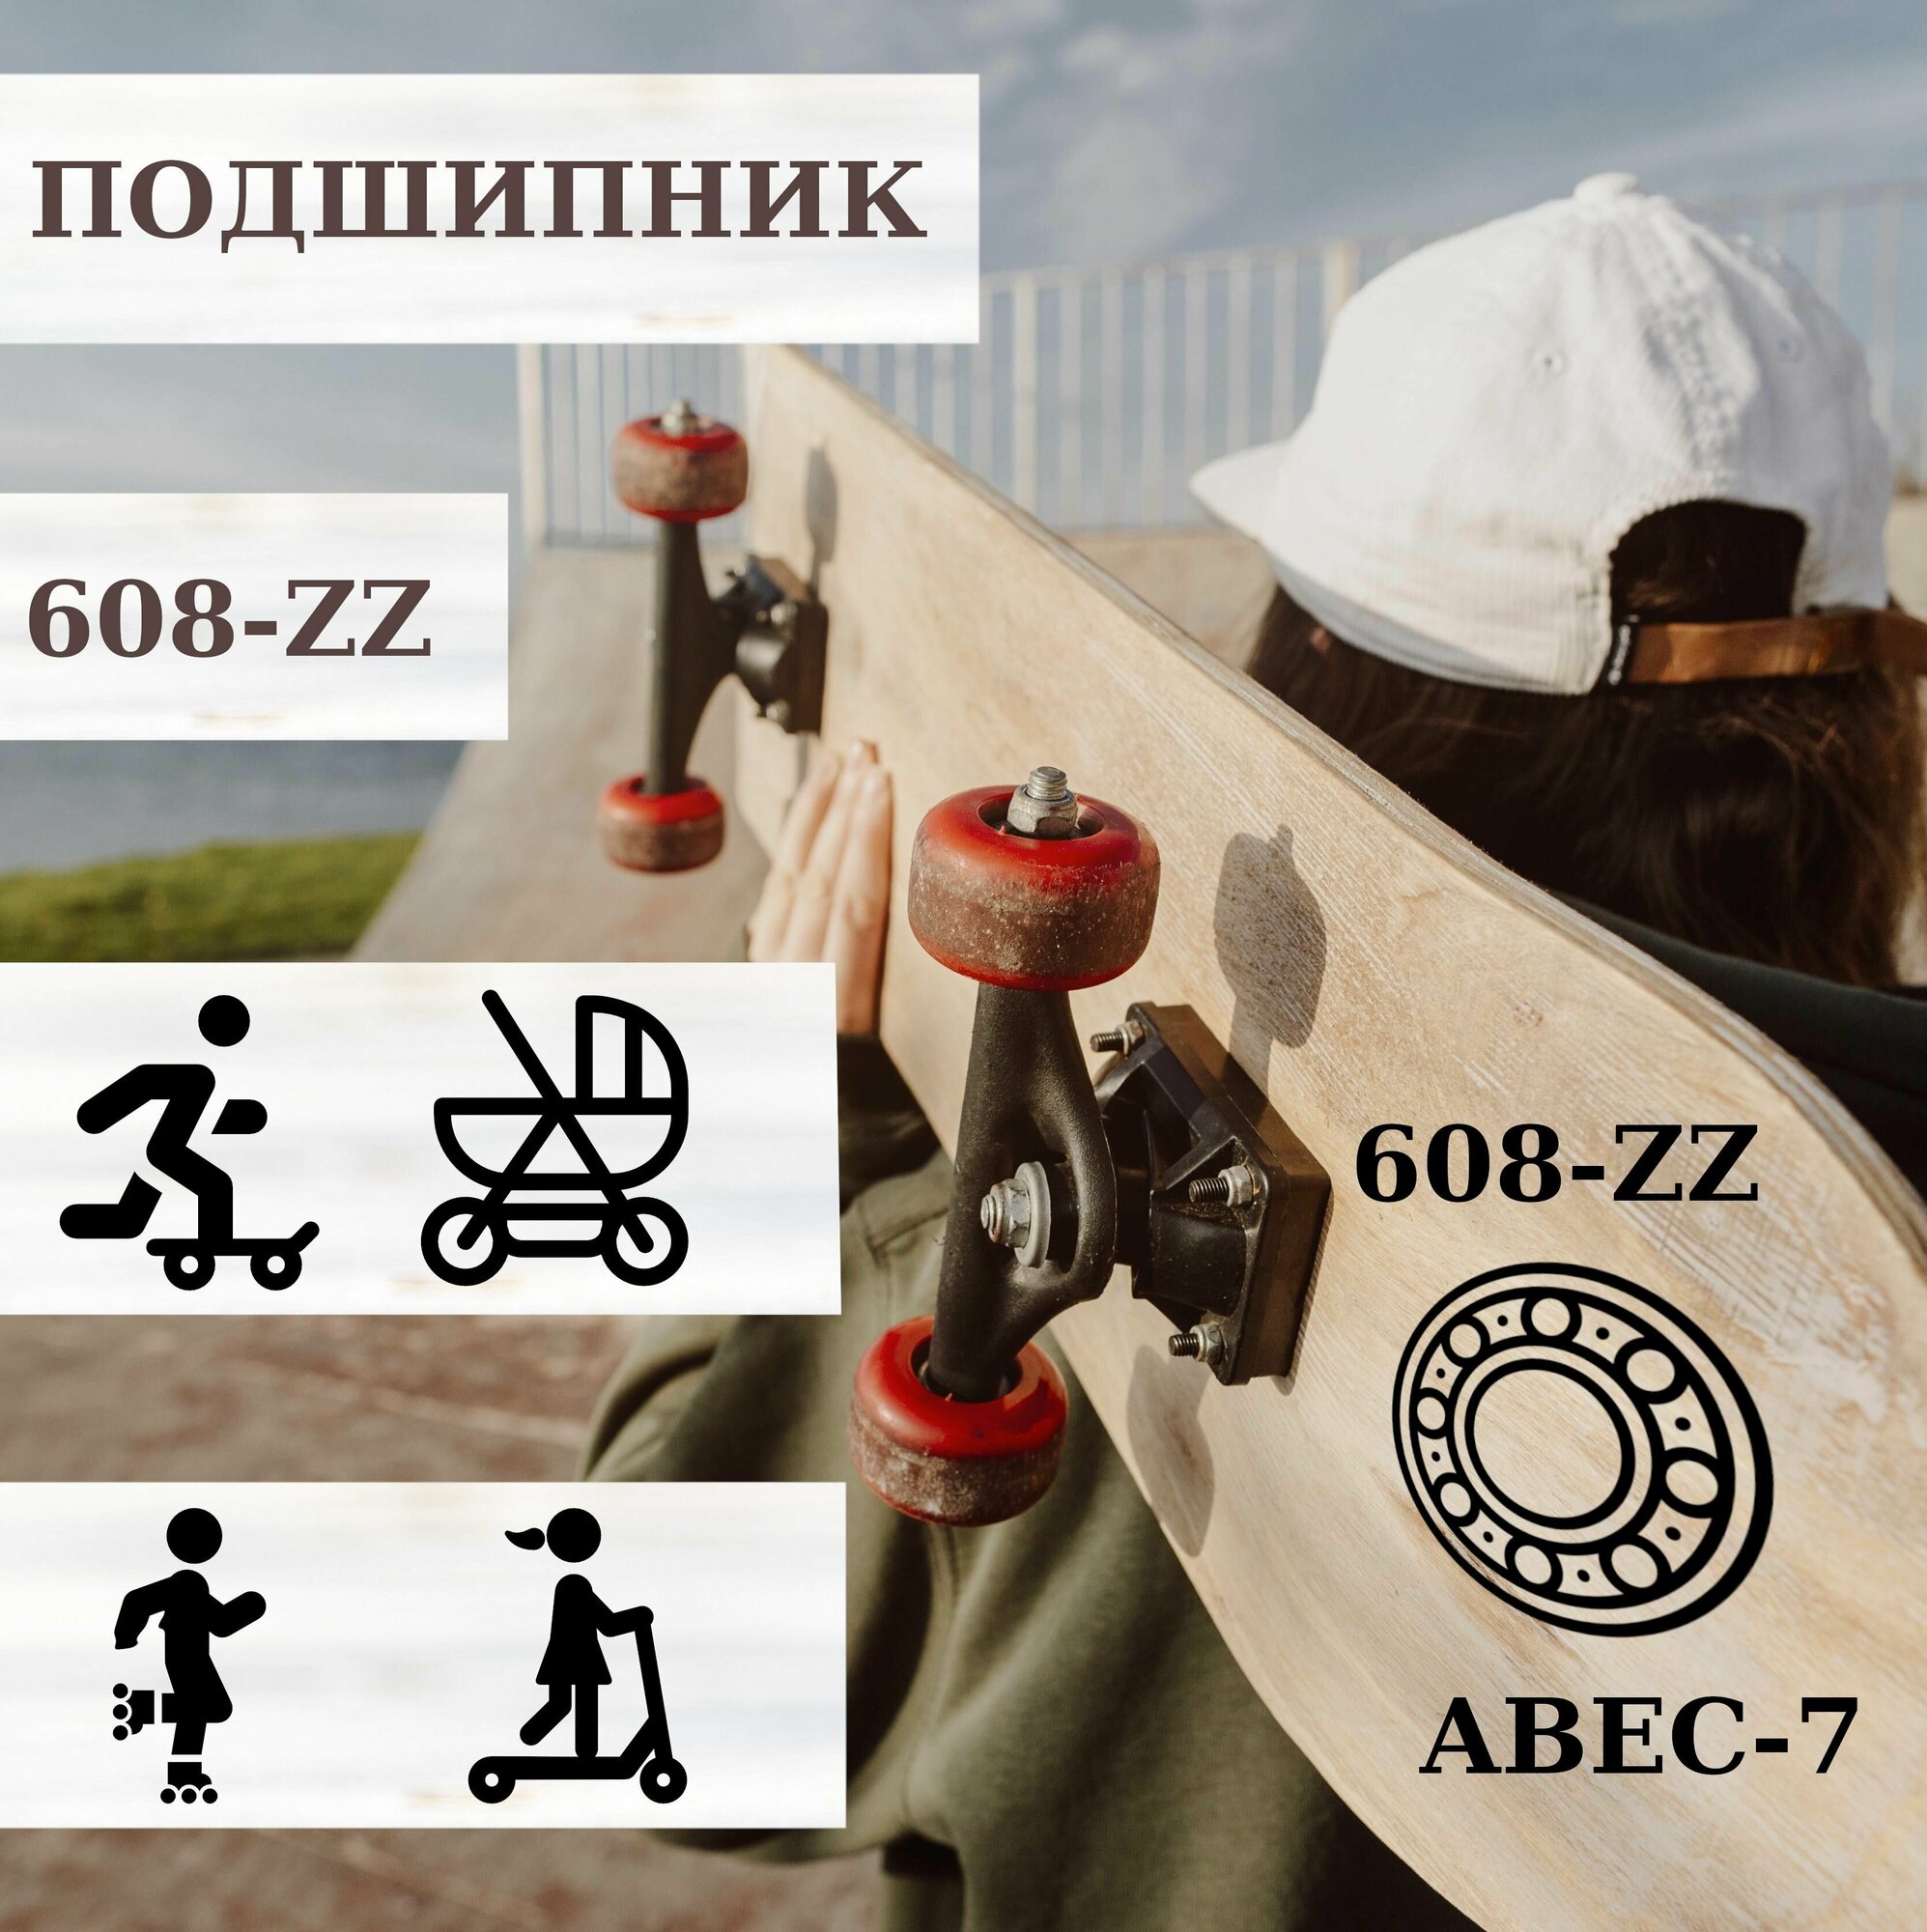 Подшипник 608-2Z 608ZZ (80018) 6082Z. (4 шт.). Для самокатов, роликов, скейтбордов. ABEC-7